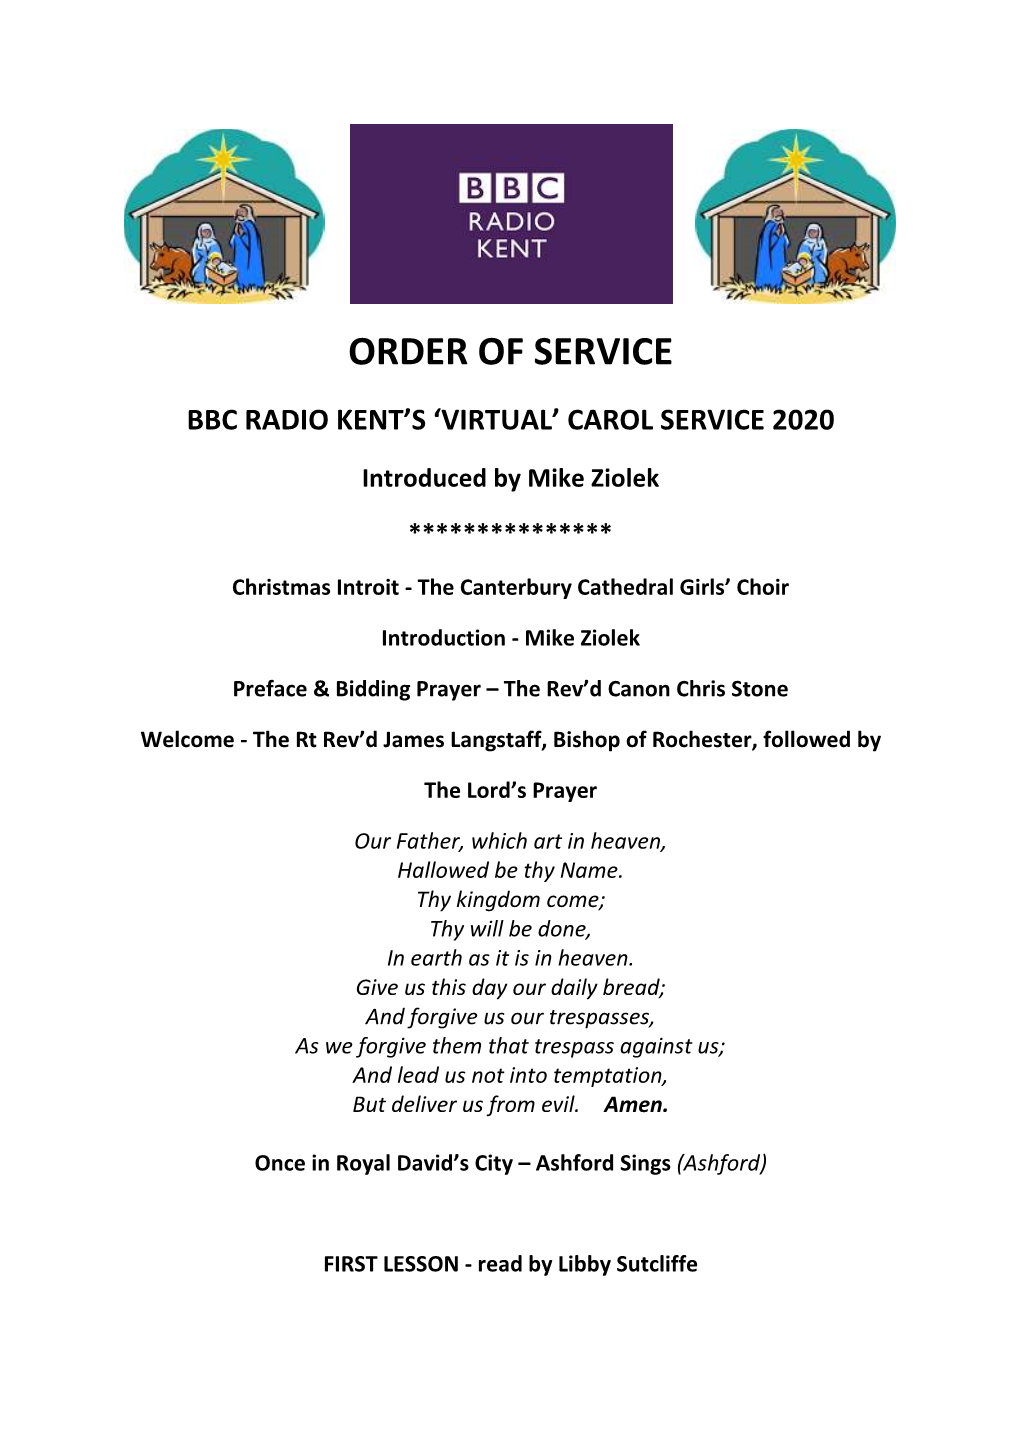 Order of Service Bbc Radio Kent's